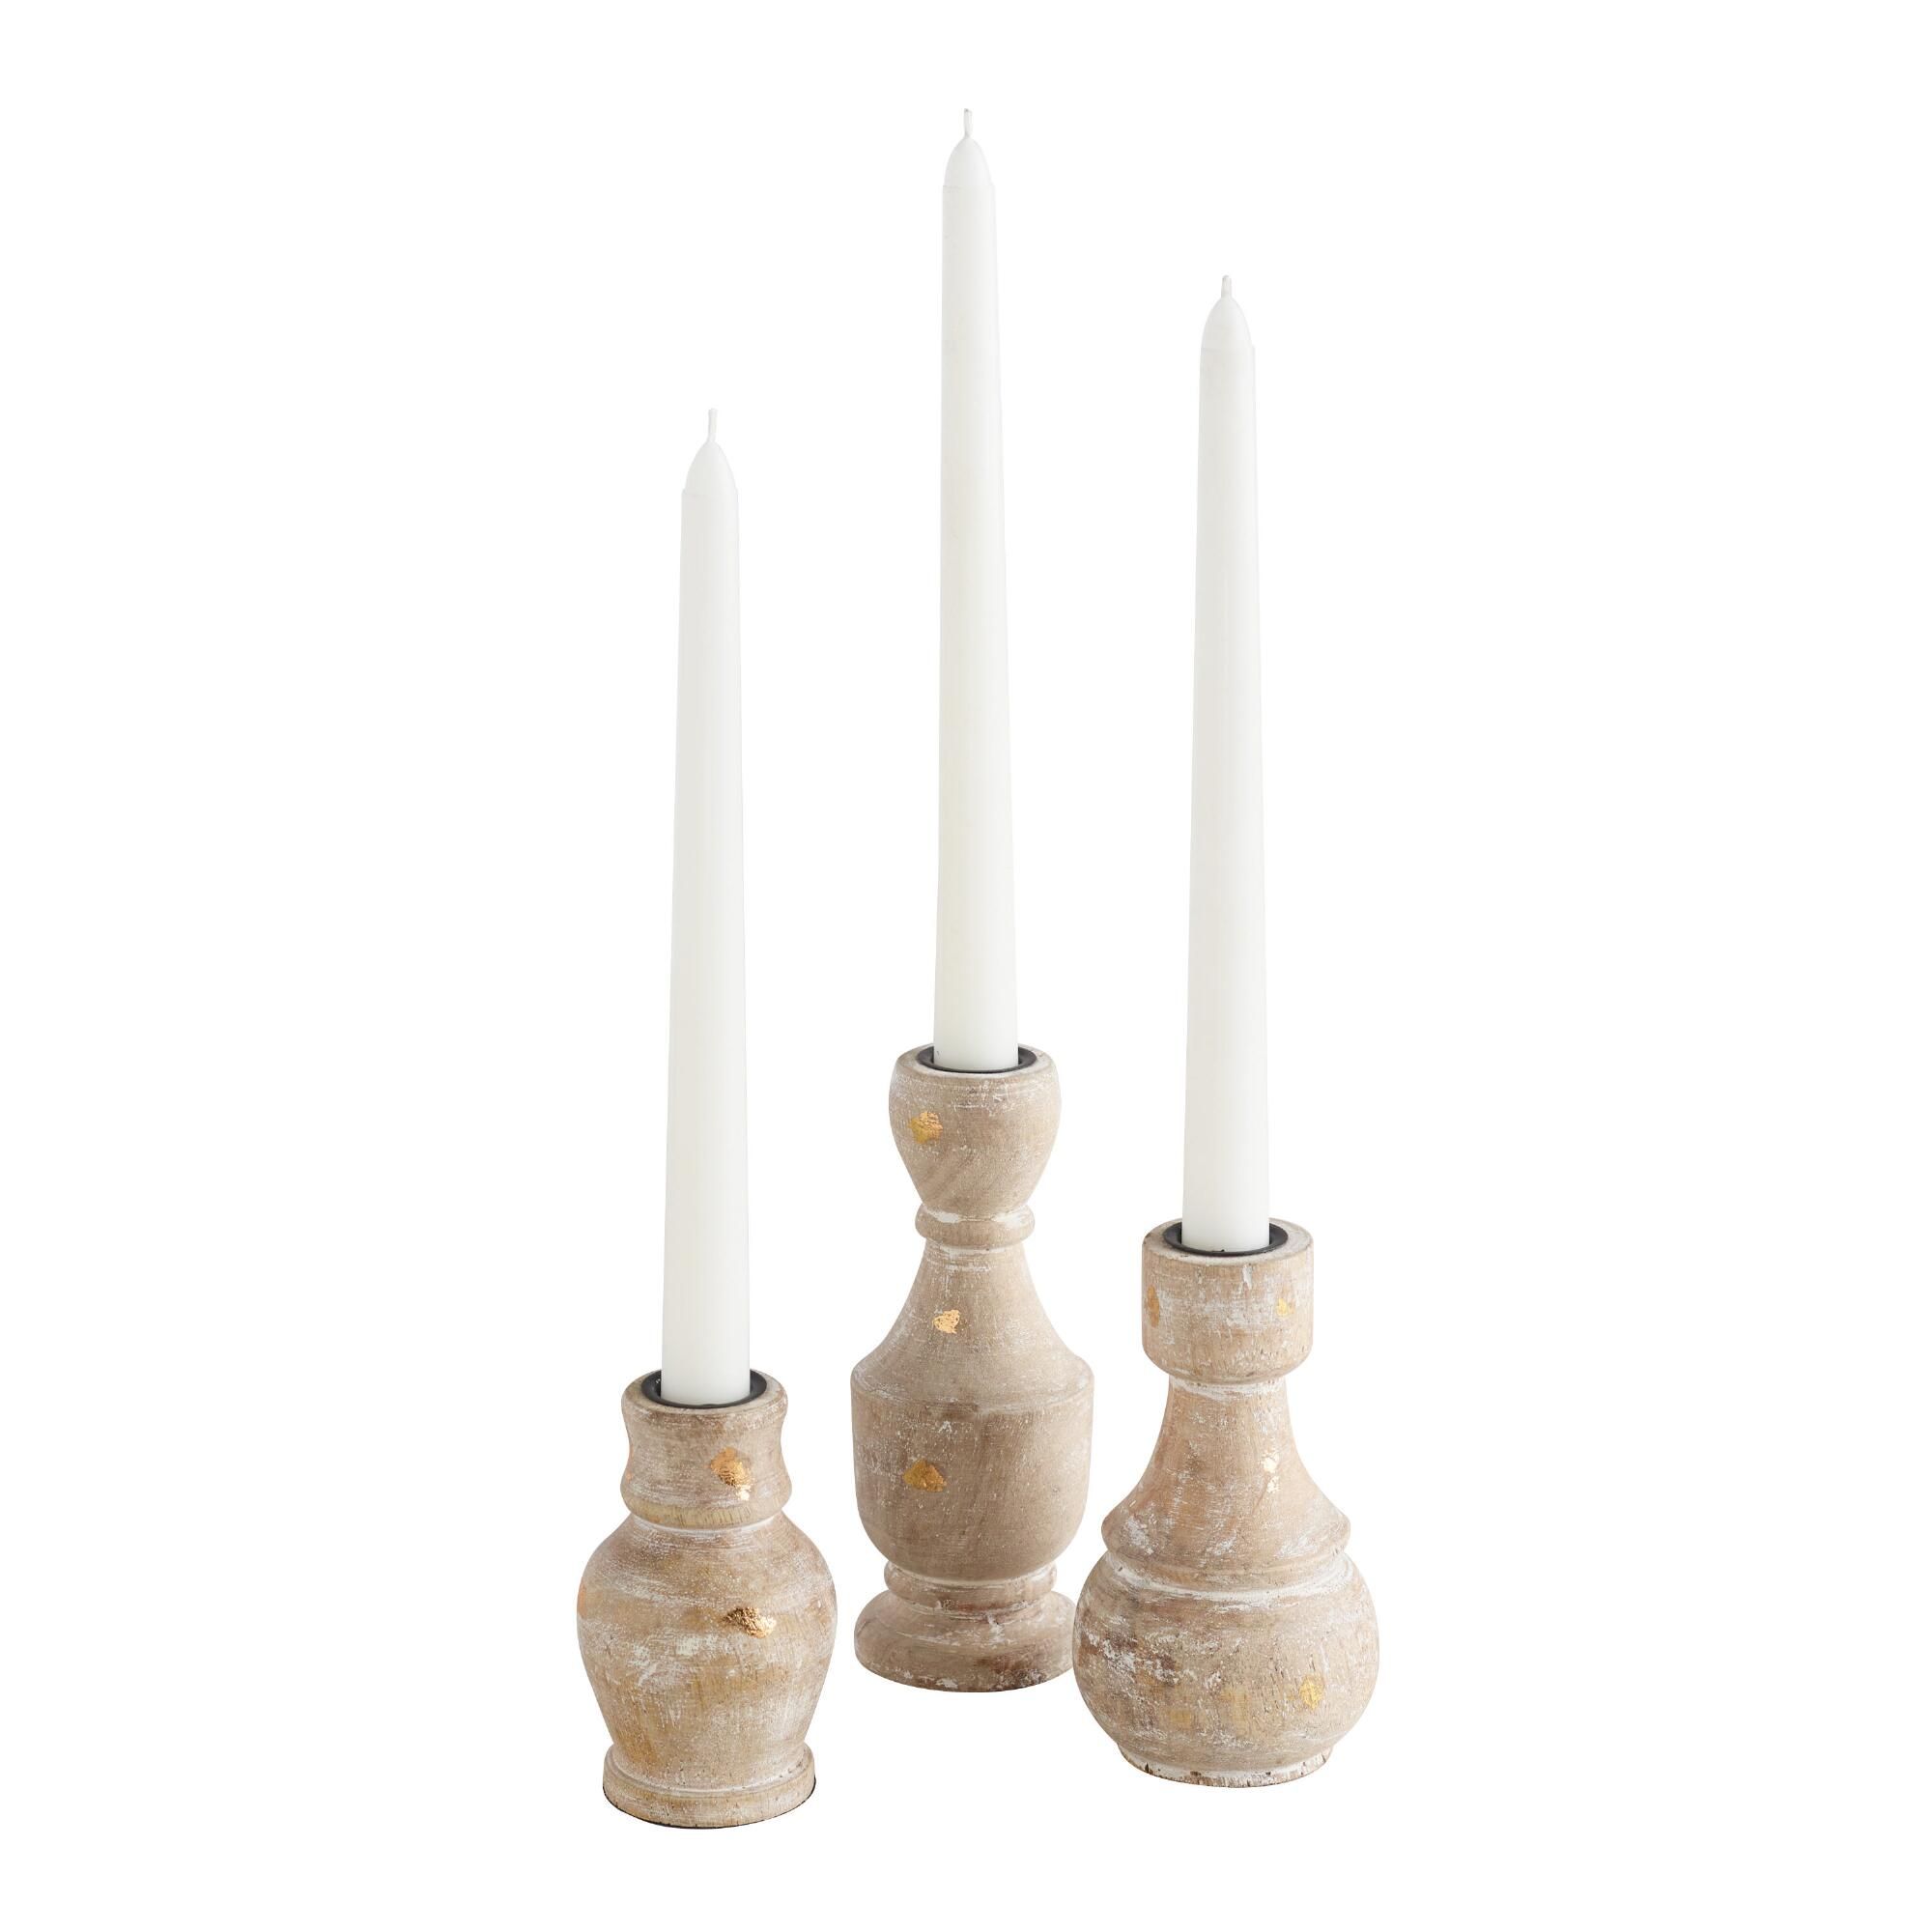 White and Gold Bottle Taper Candleholders, Set of 3 by World Market | World Market